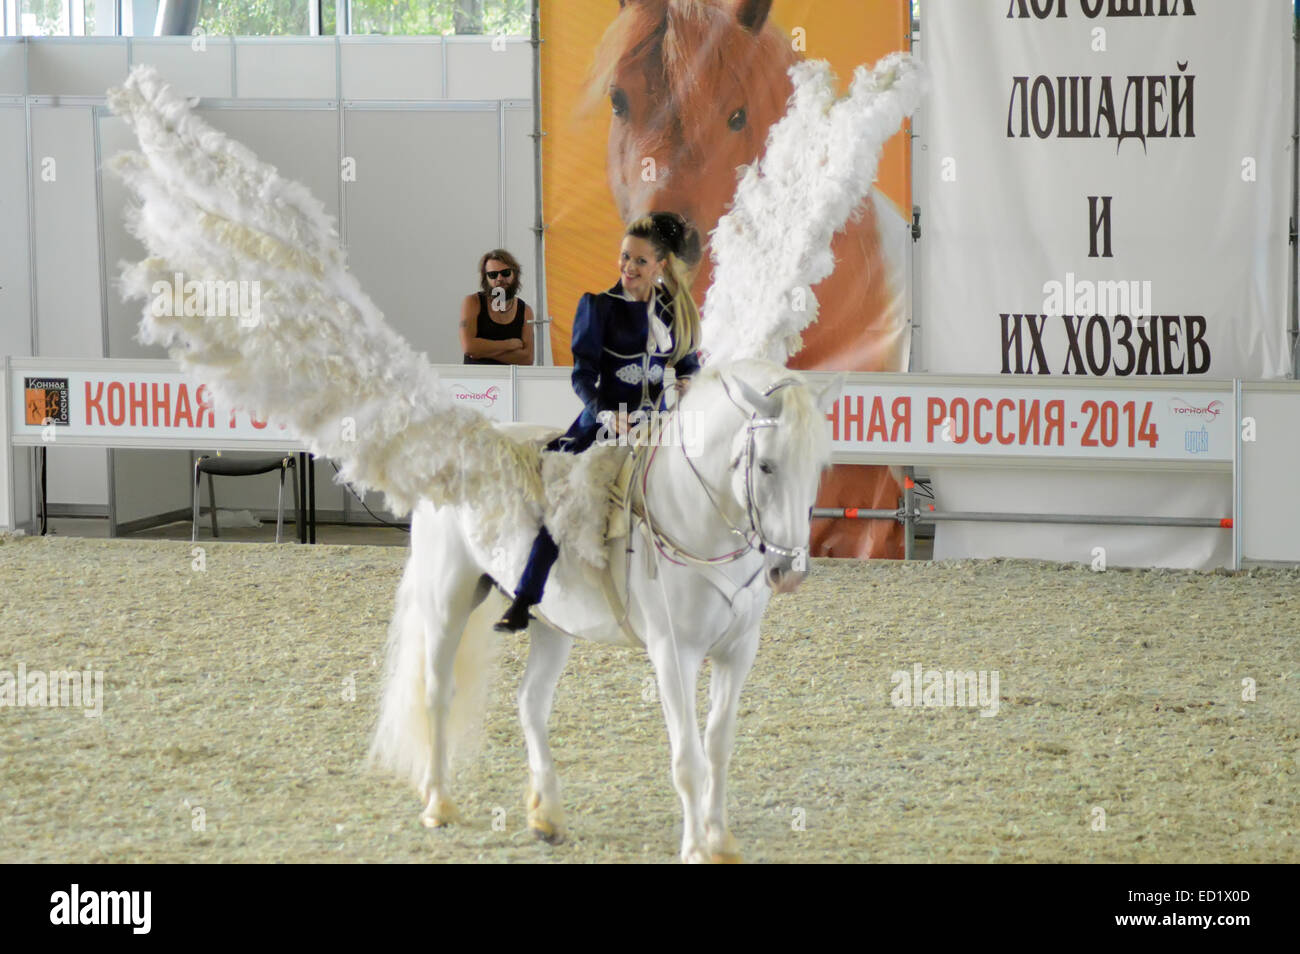 Woman jockey in blue dress International Horse Show. Female rider on a white horse. Pegasus. White Wings Stock Photo